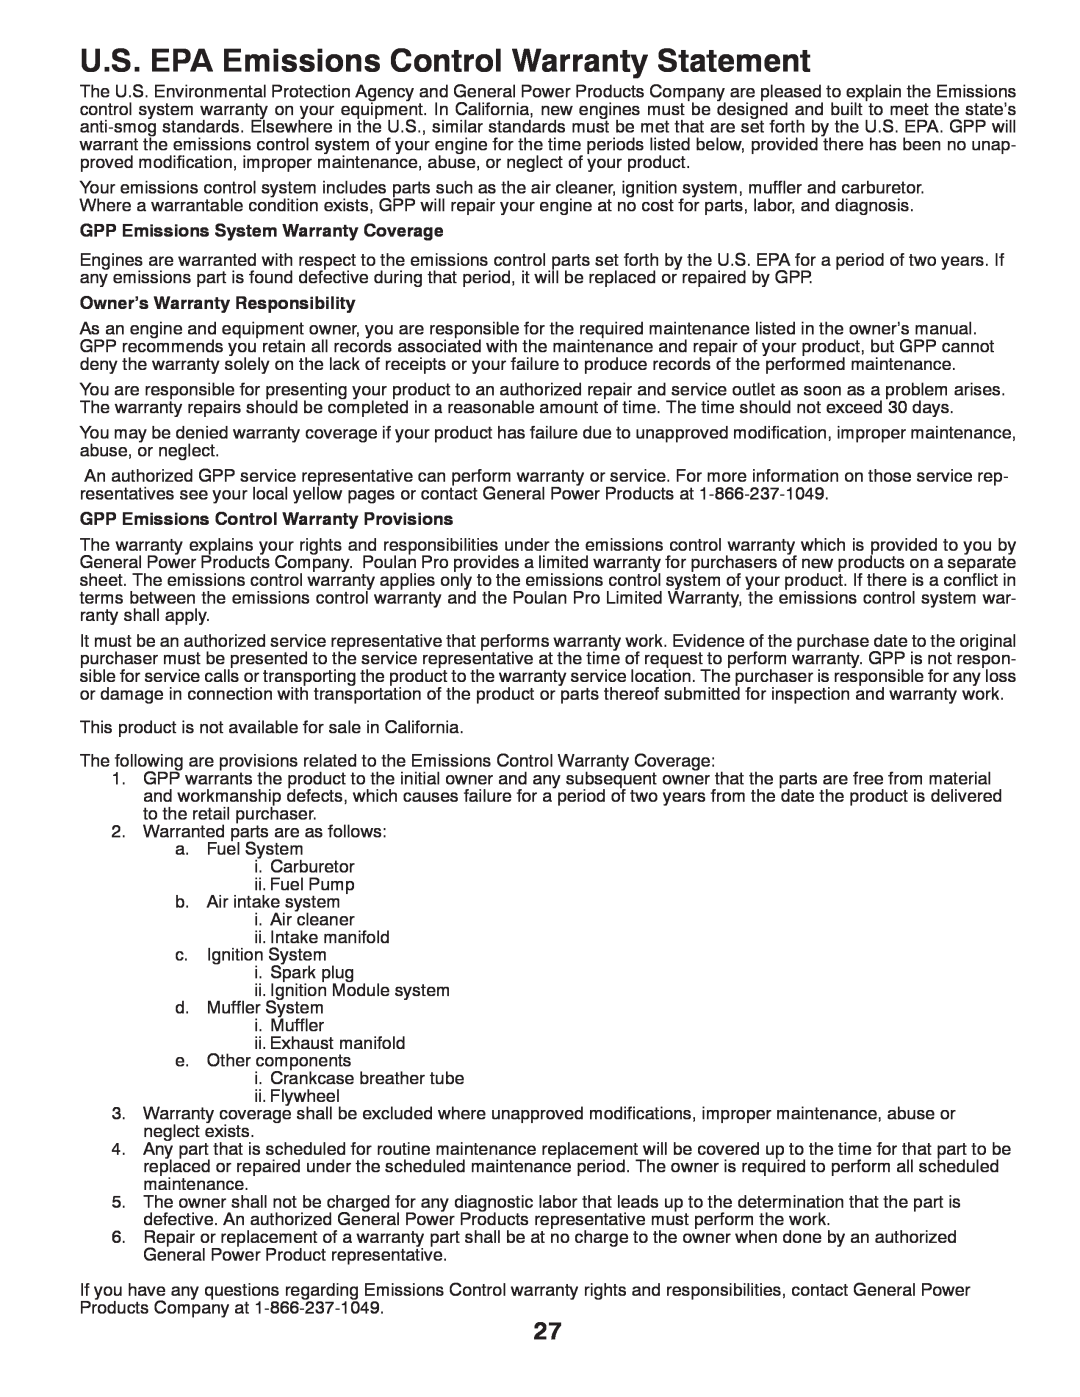 Poulan 420077 owner manual U.S. EPA Emissions Control Warranty Statement, GPP Emissions System Warranty Coverage 